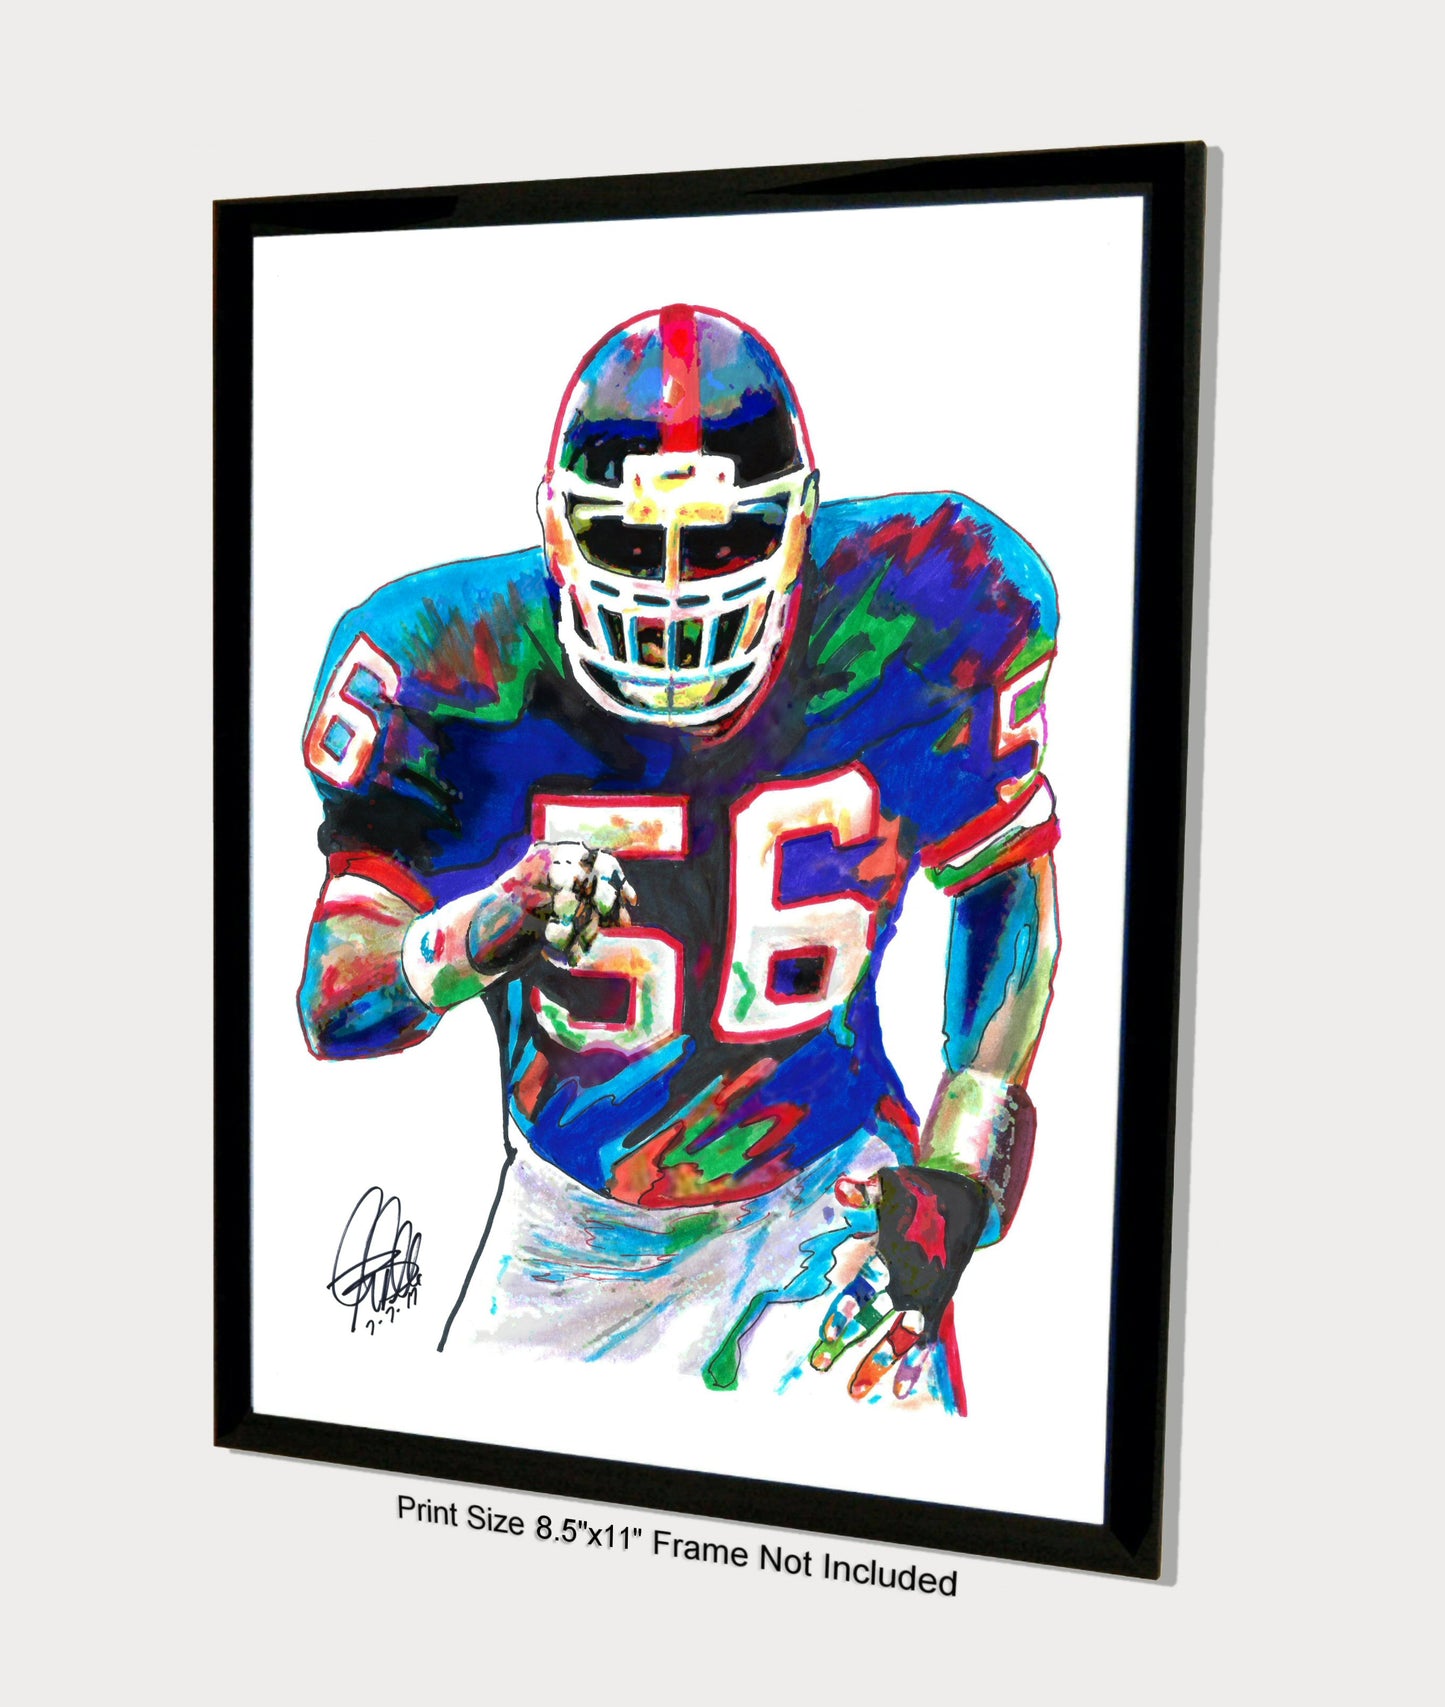 Lawrence Taylor New York Giants LB Football Sports Poster Print Wall Art 8.5x11